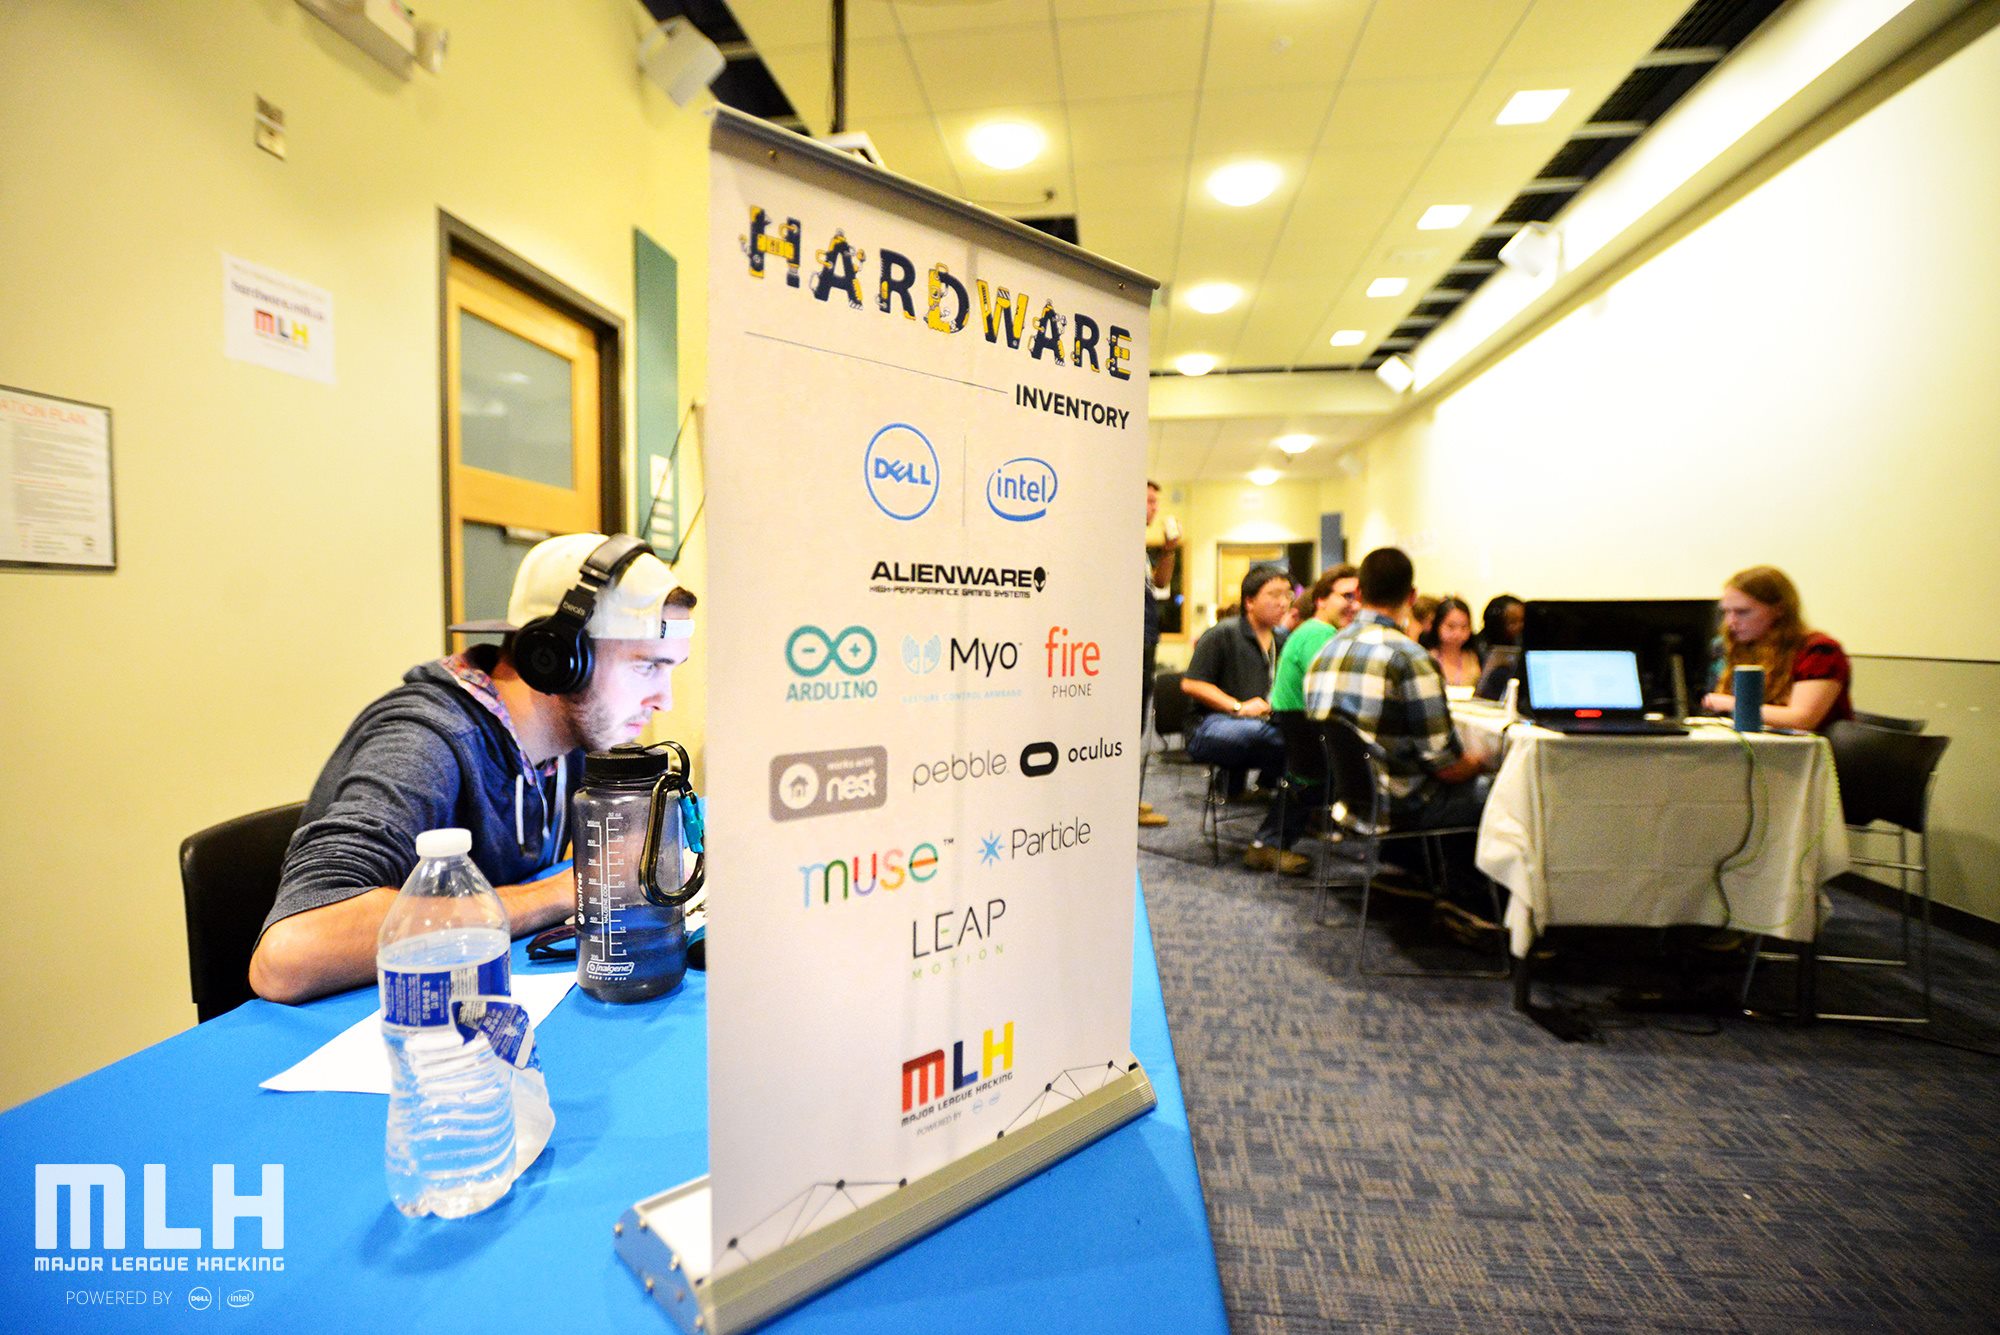 Photos of Major League Hacking's hardware lab.